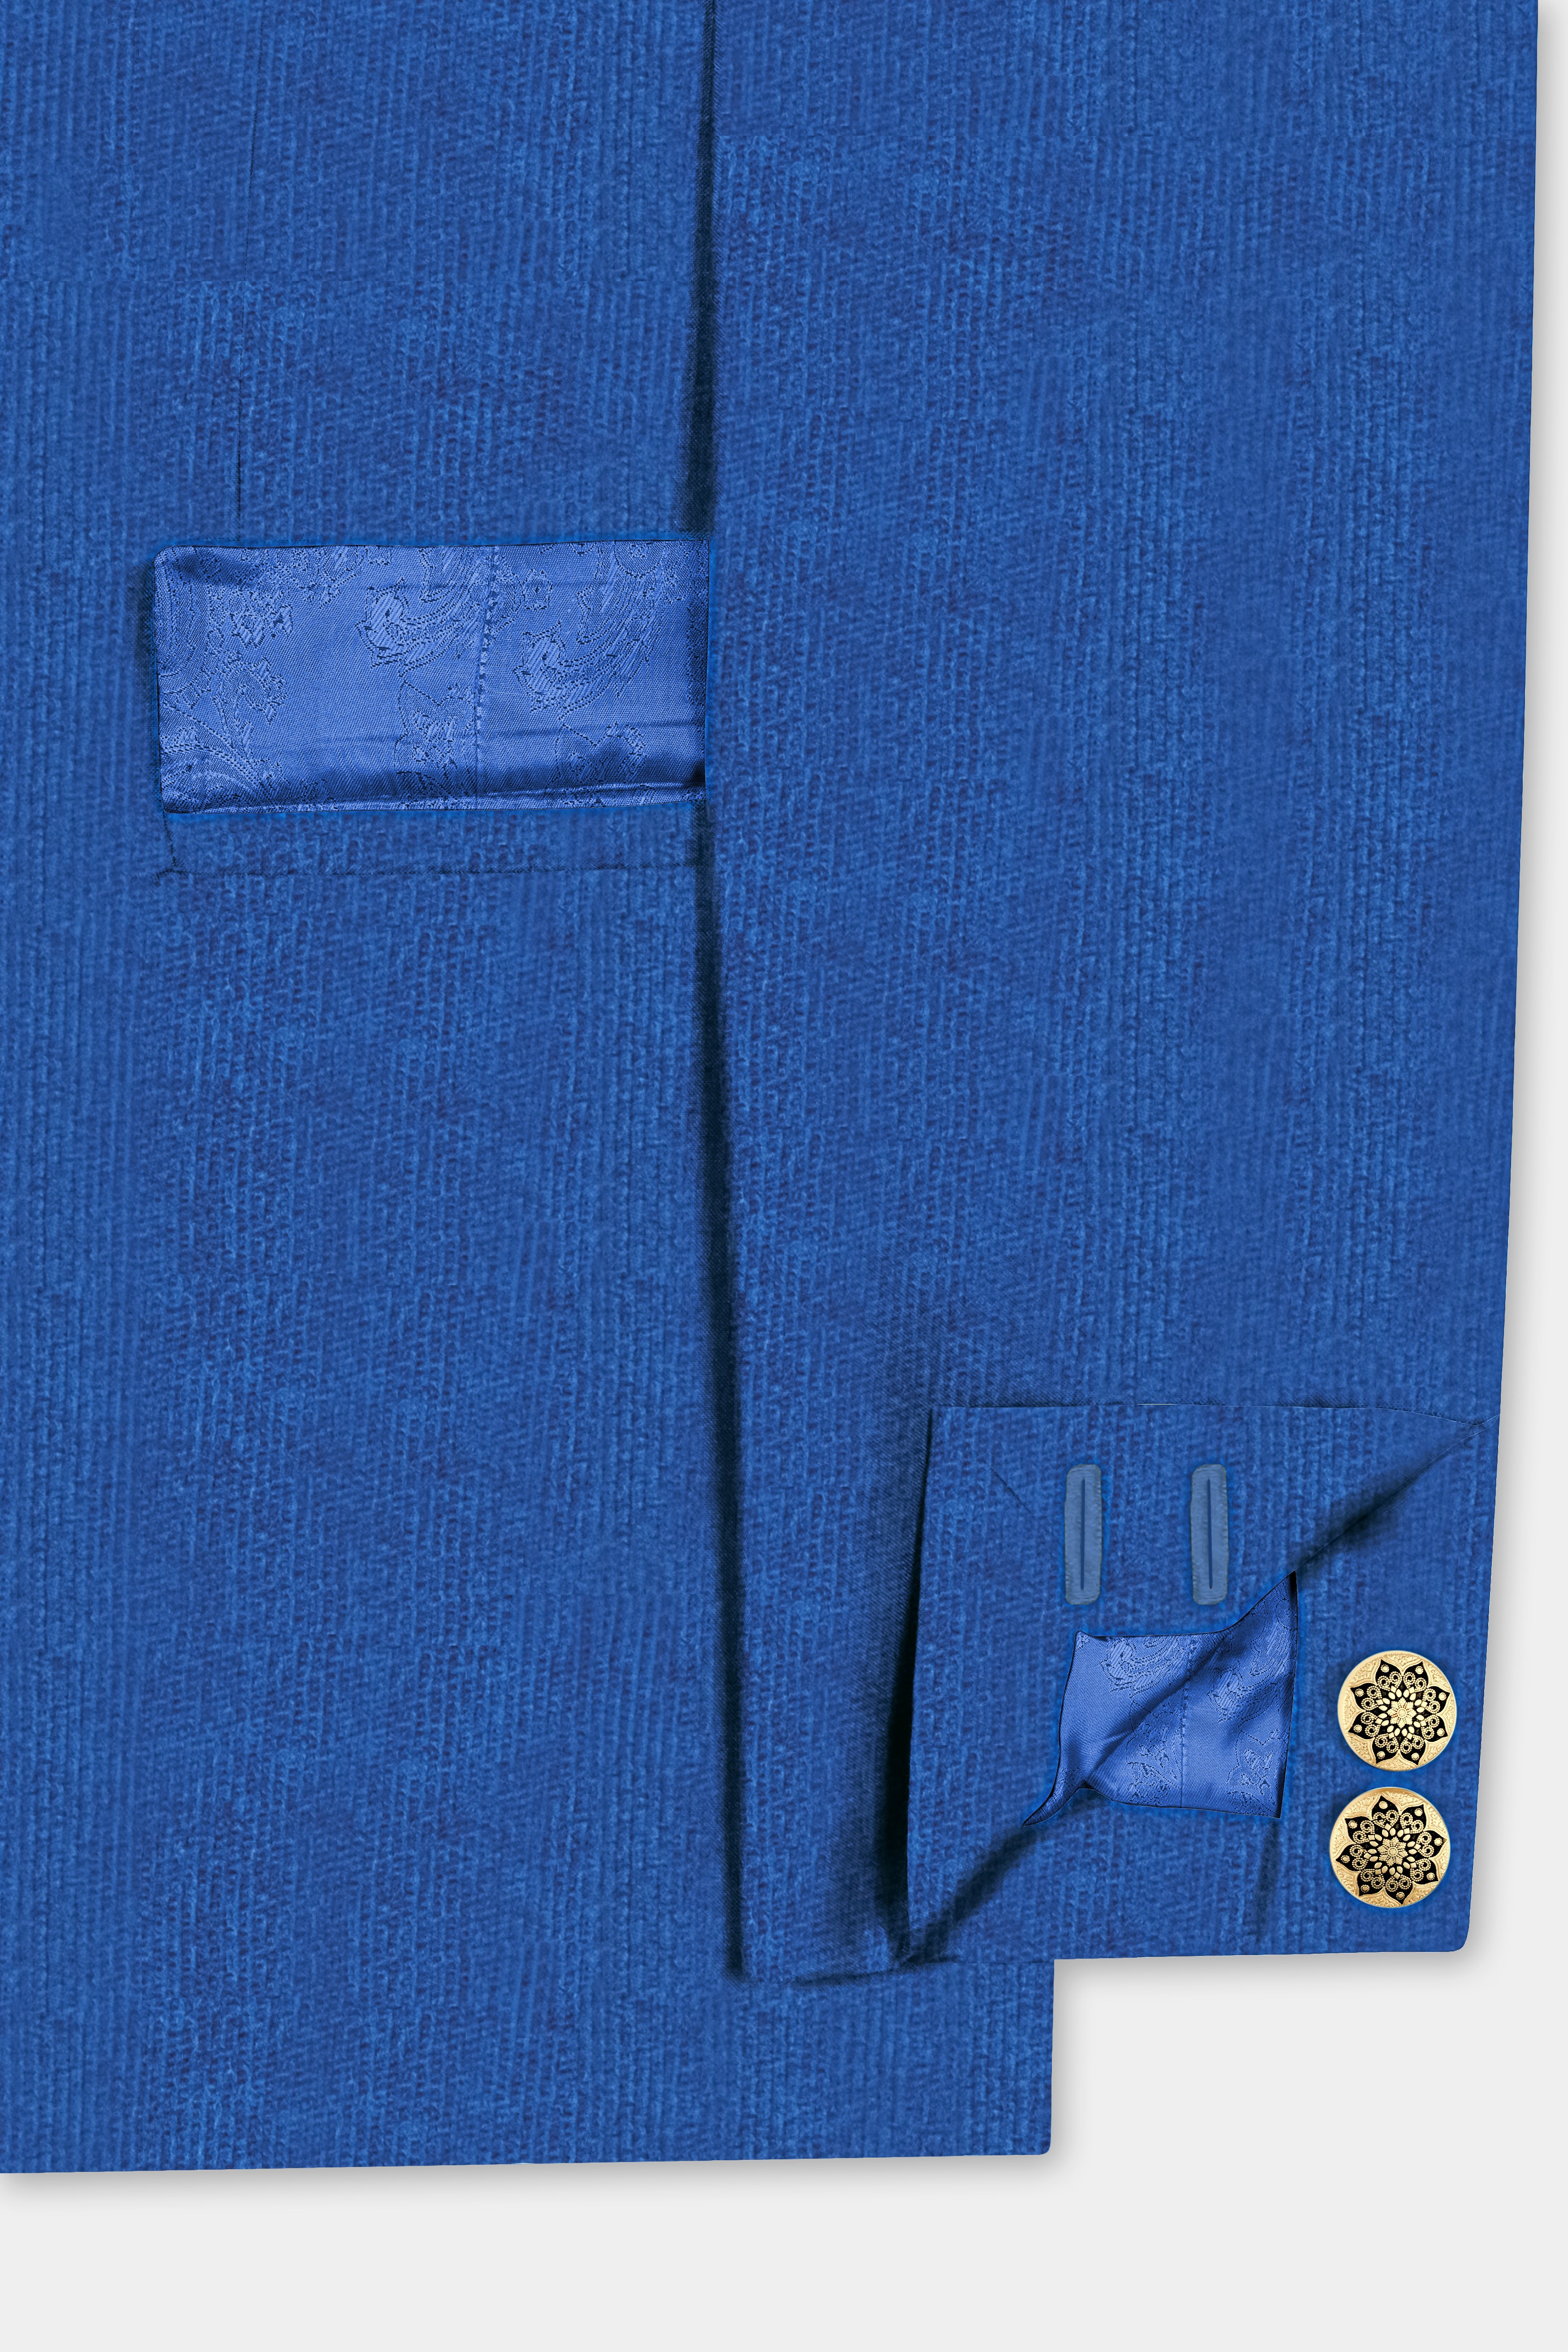 Cobalt Blue Cross Placket Bandhgala/Mandarin Corduroy Premium Cotton Designer Blazer